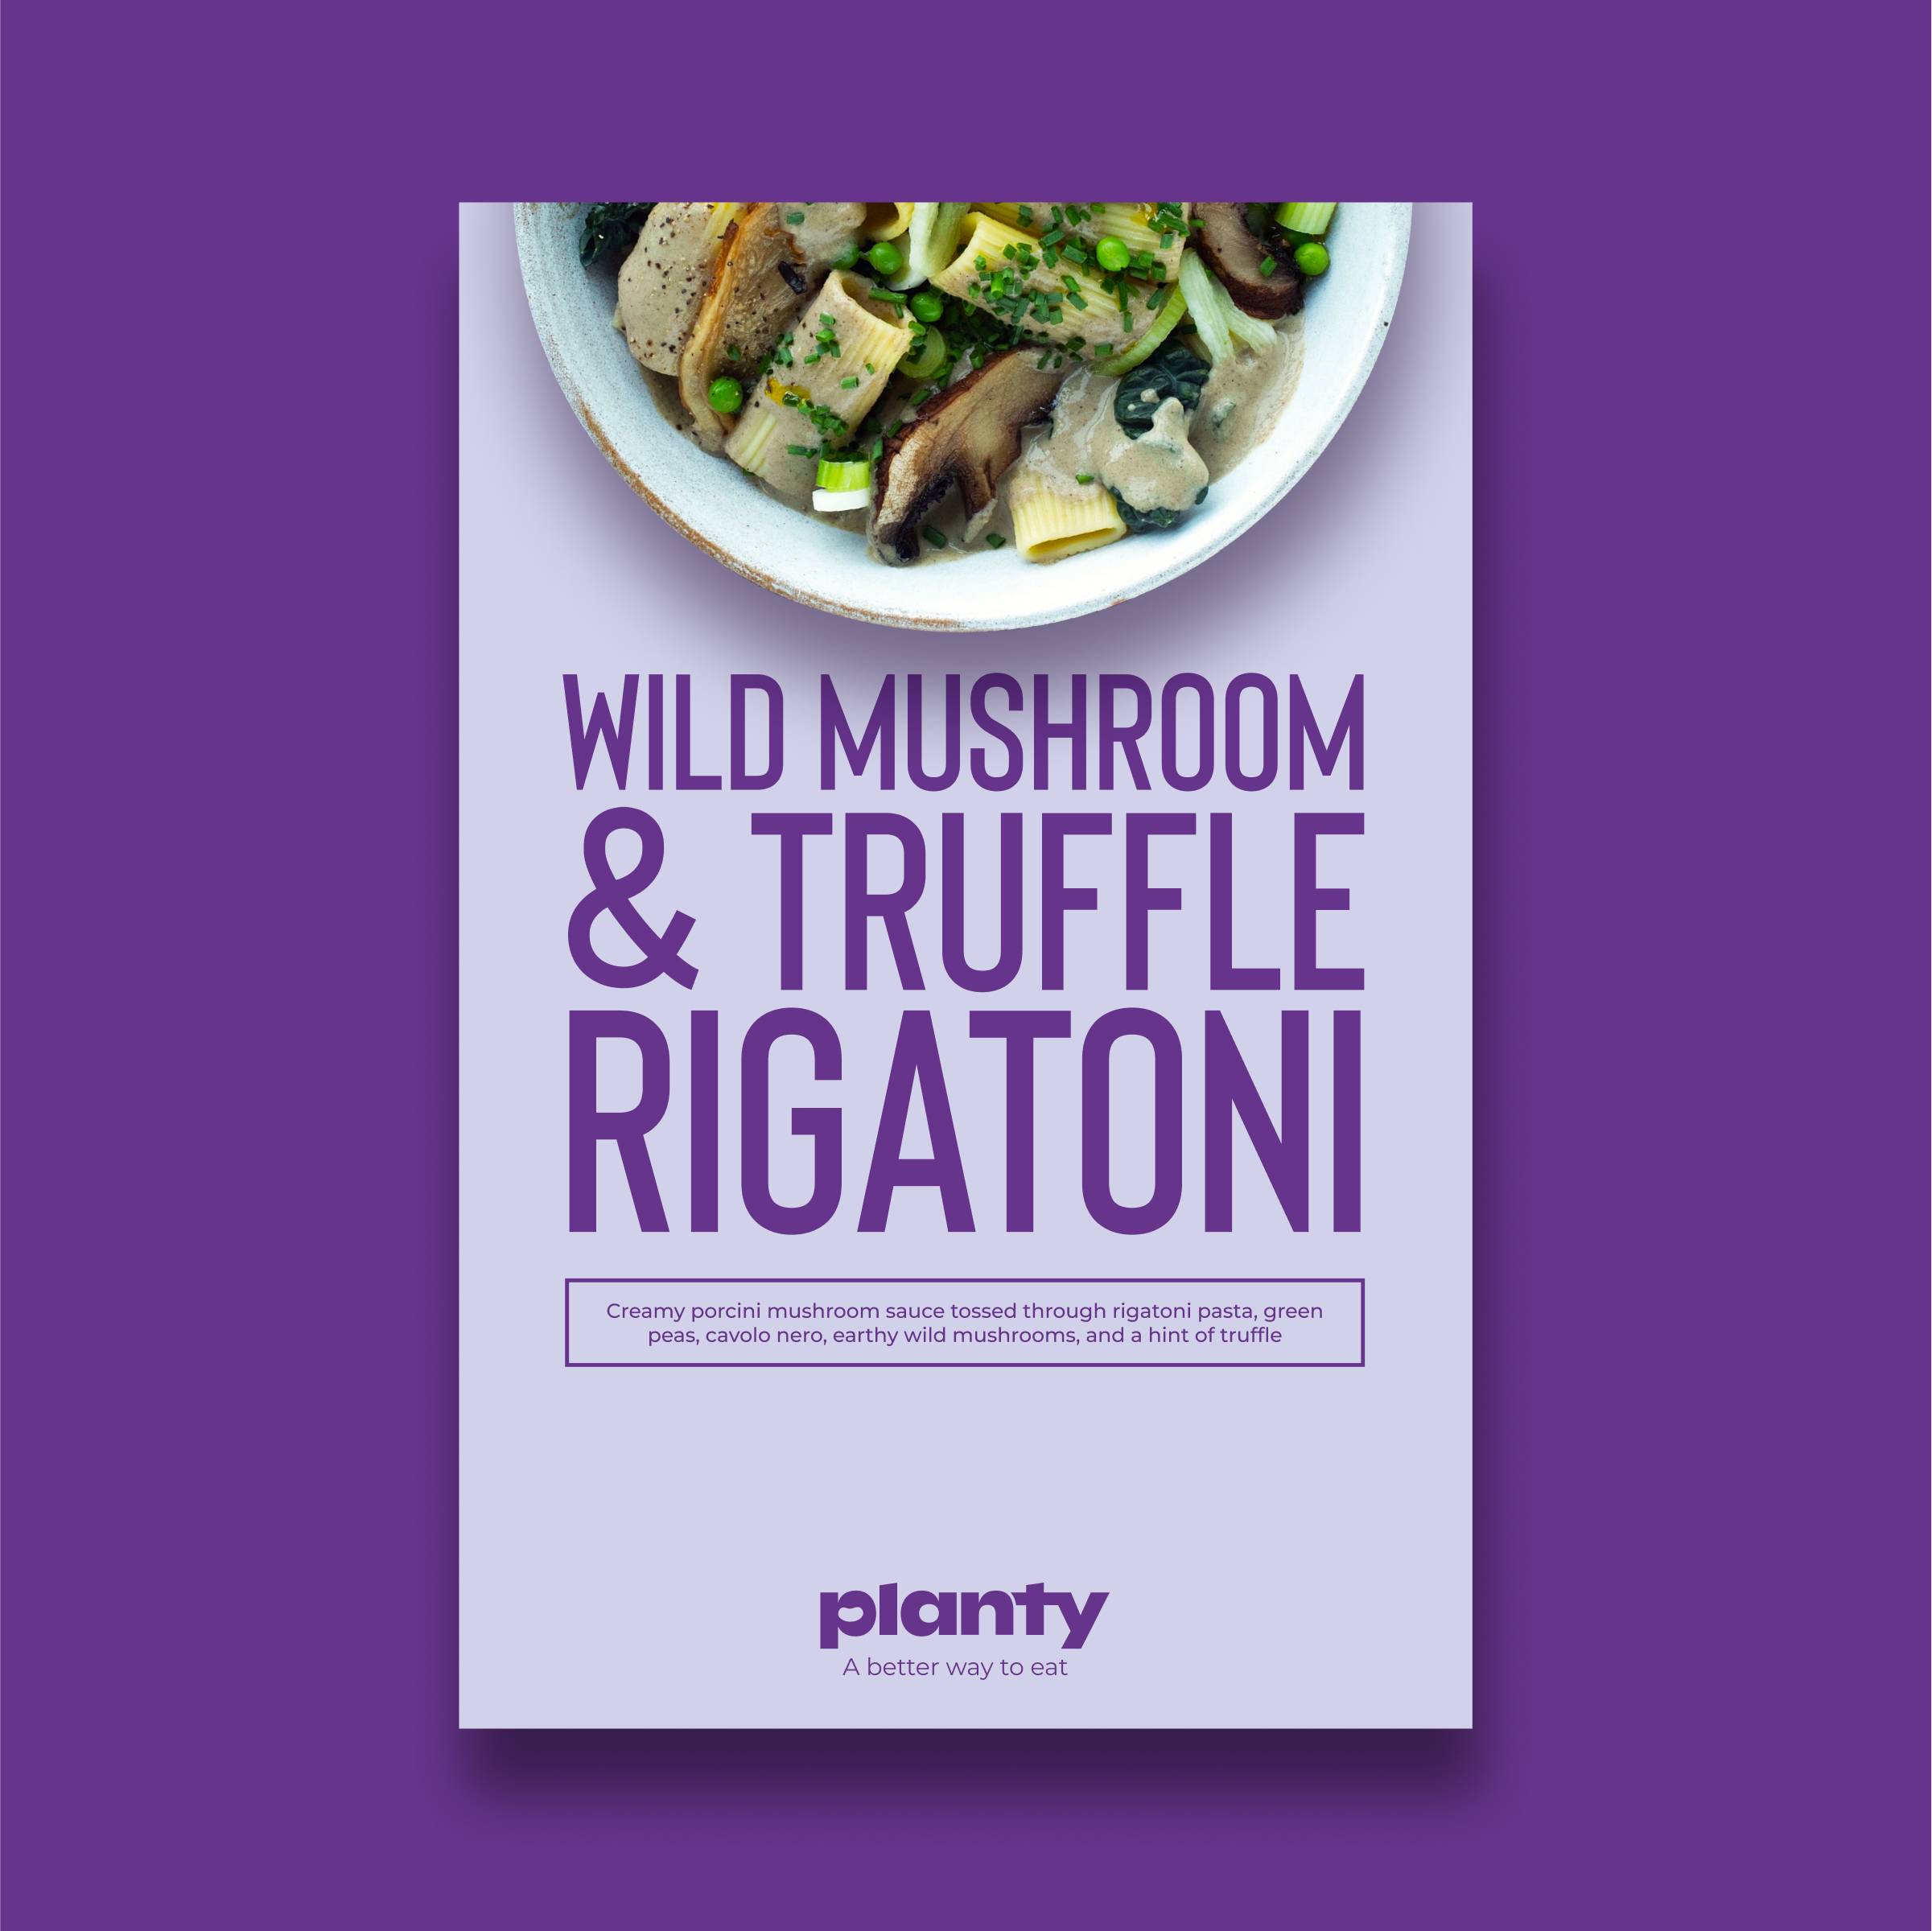 Wild Mushroom & Truffle Rigatoni image 2